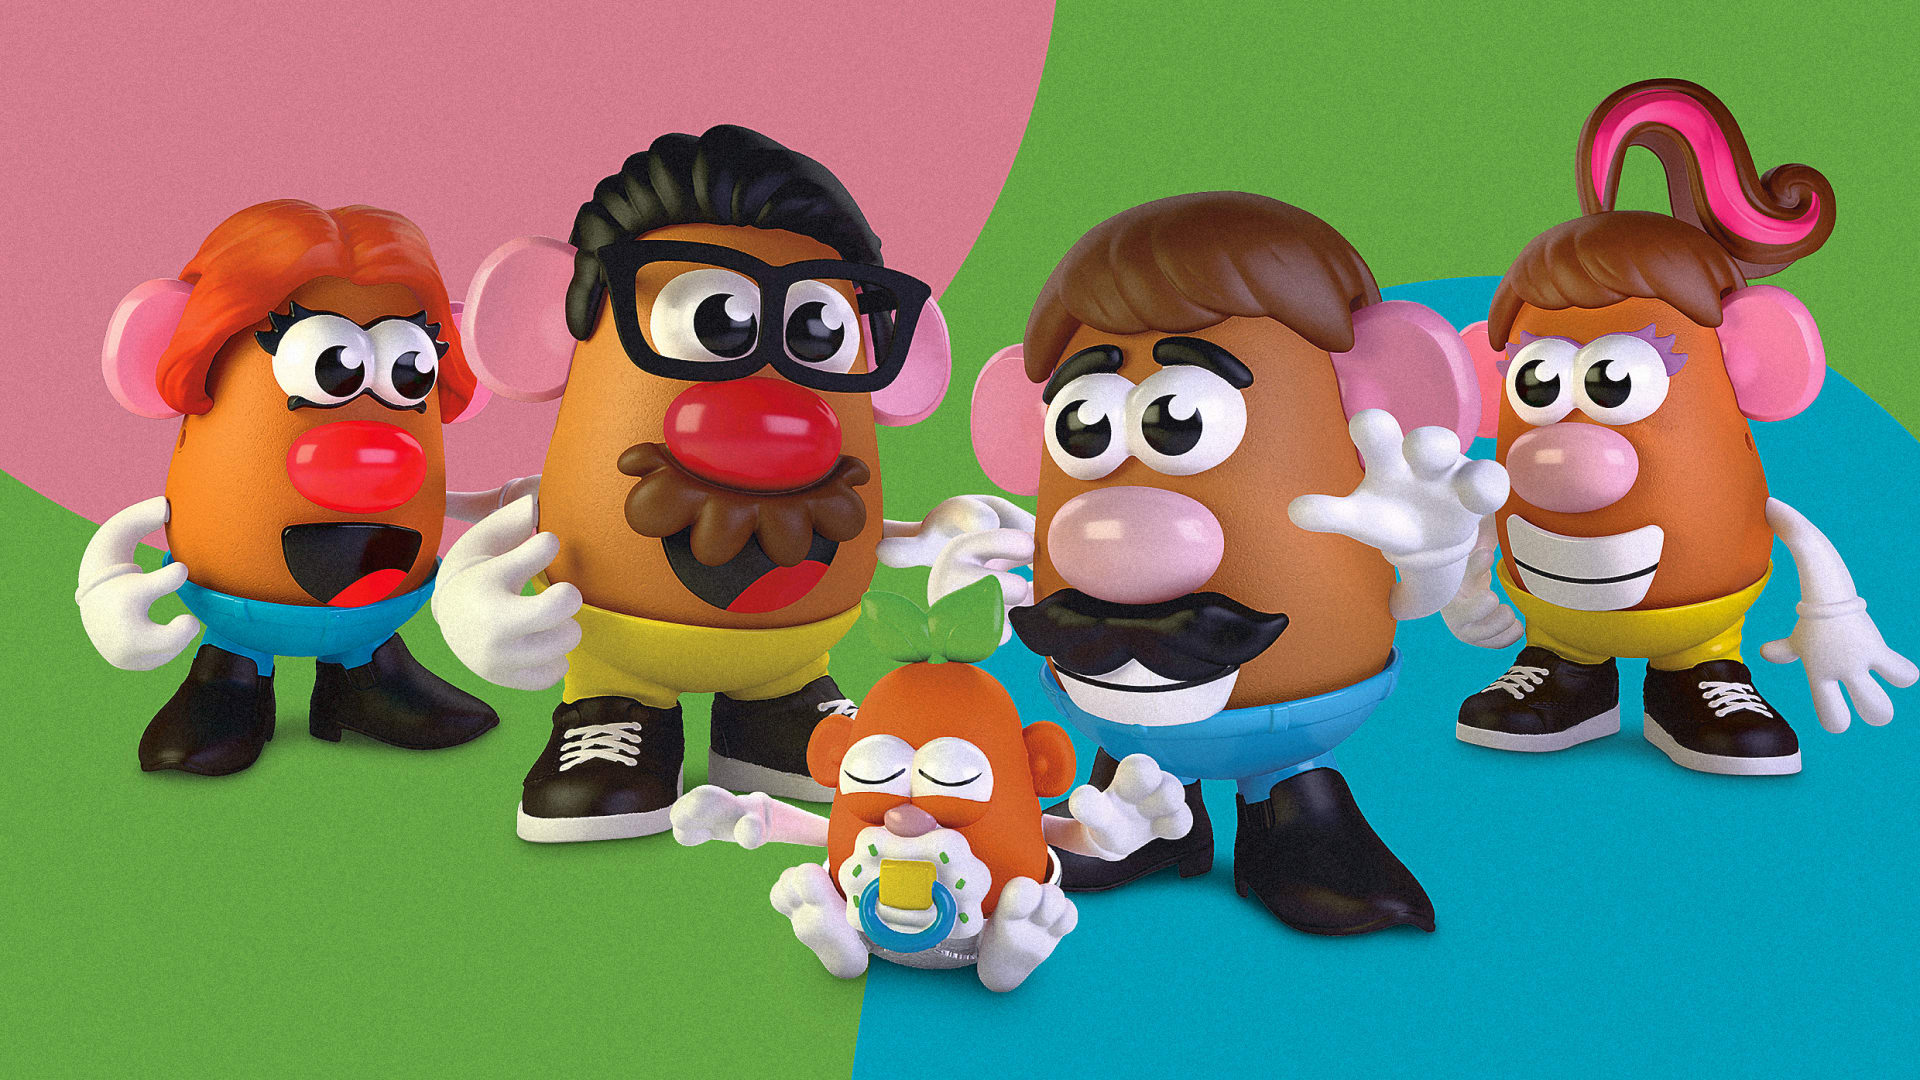 The iconic Mr. Potato Head gets a 21st-century rebrand